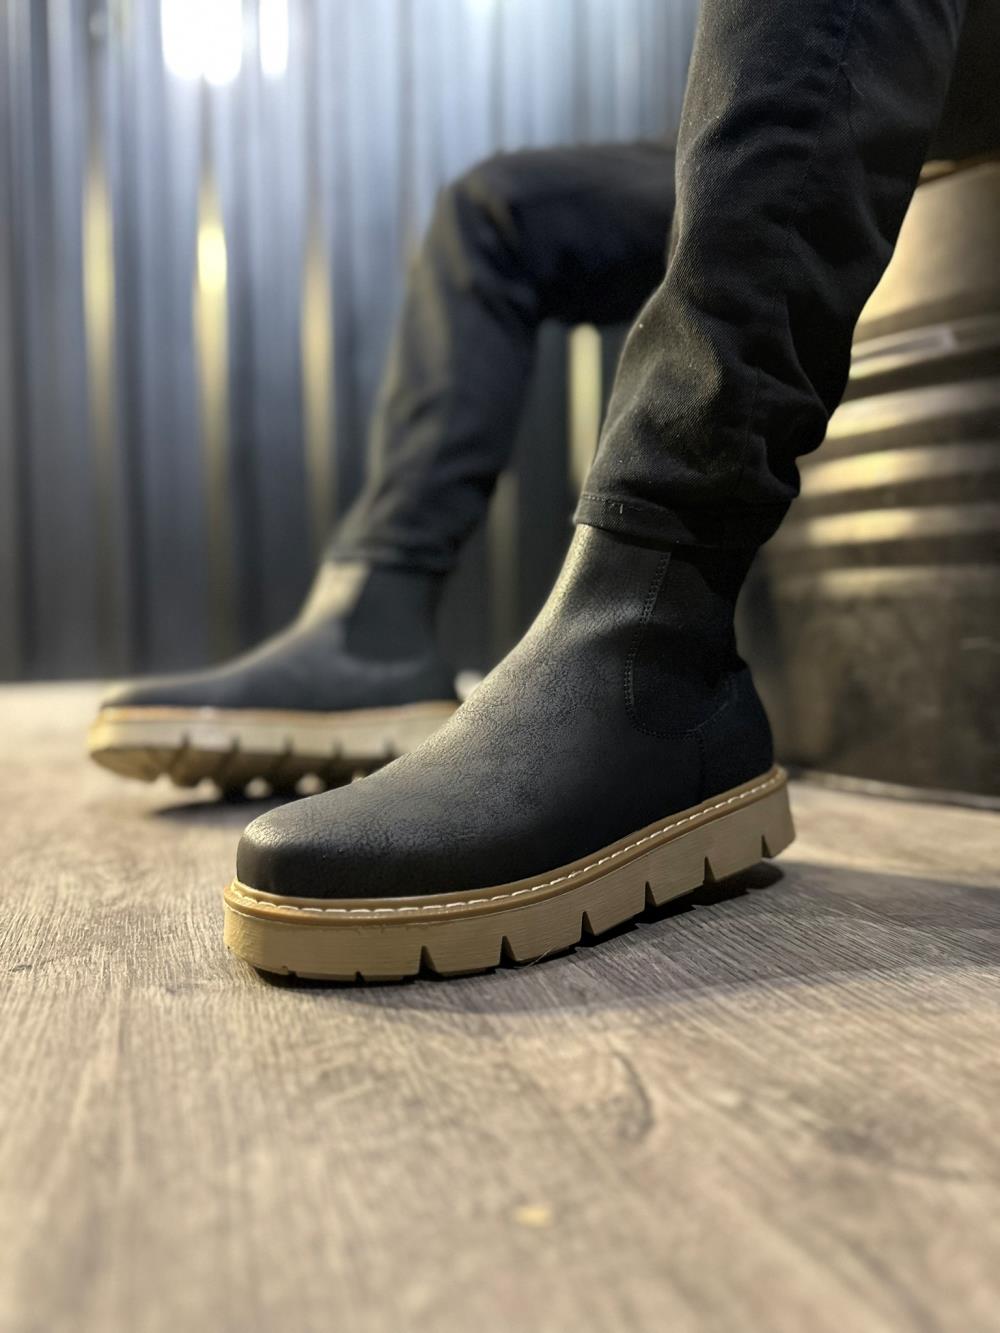 Men's High Sole Chelsea Boots 112 Black (Beige Sole) - STREETMODE™